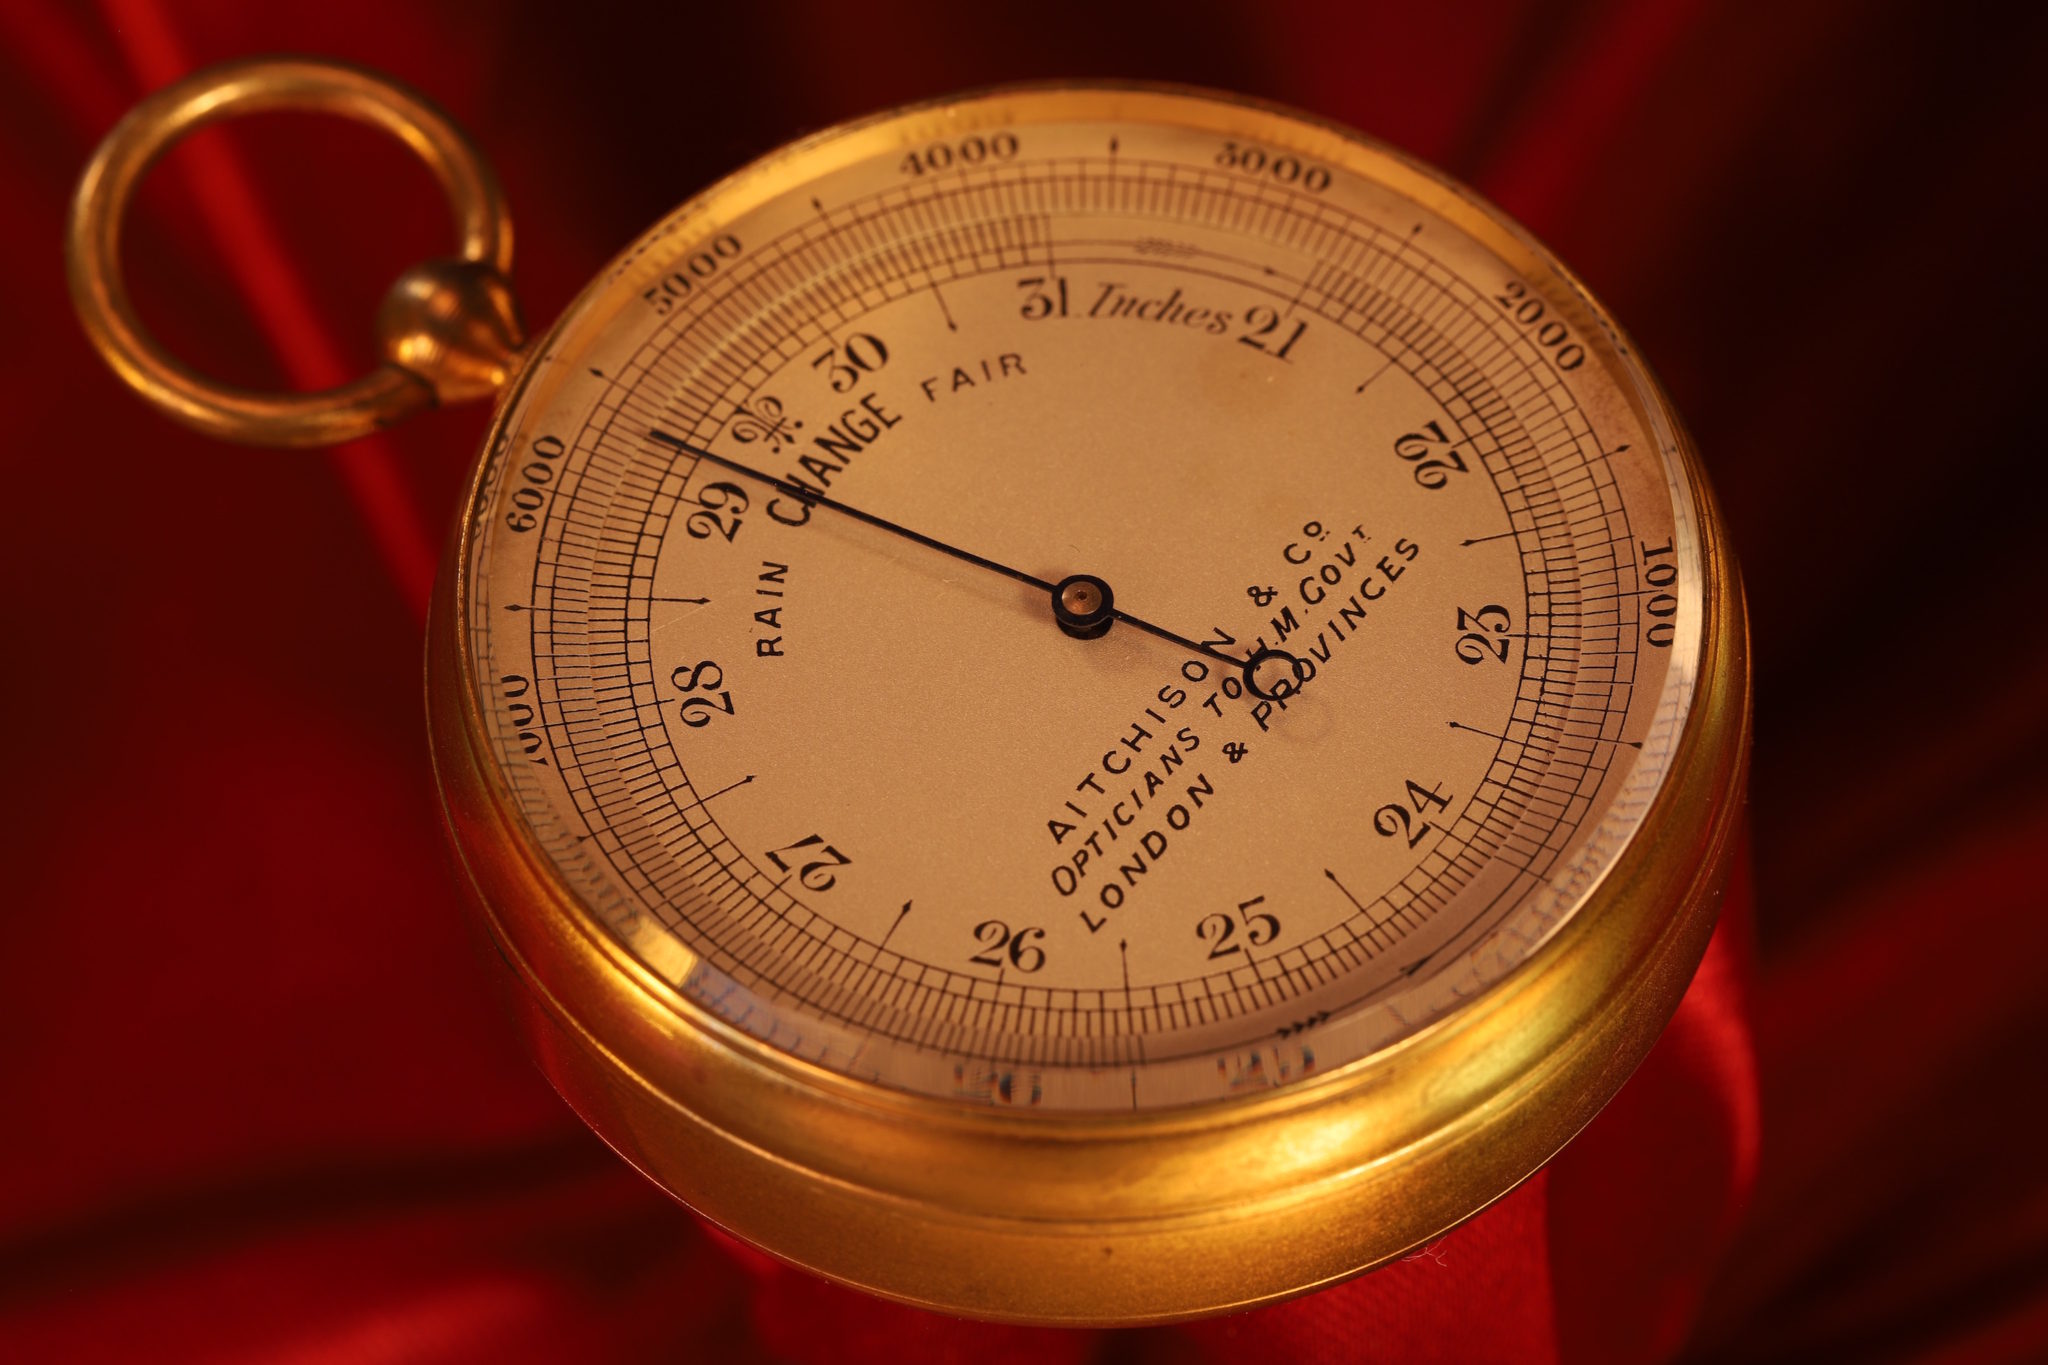 Image of Aitchison Pocket Barometer c1915